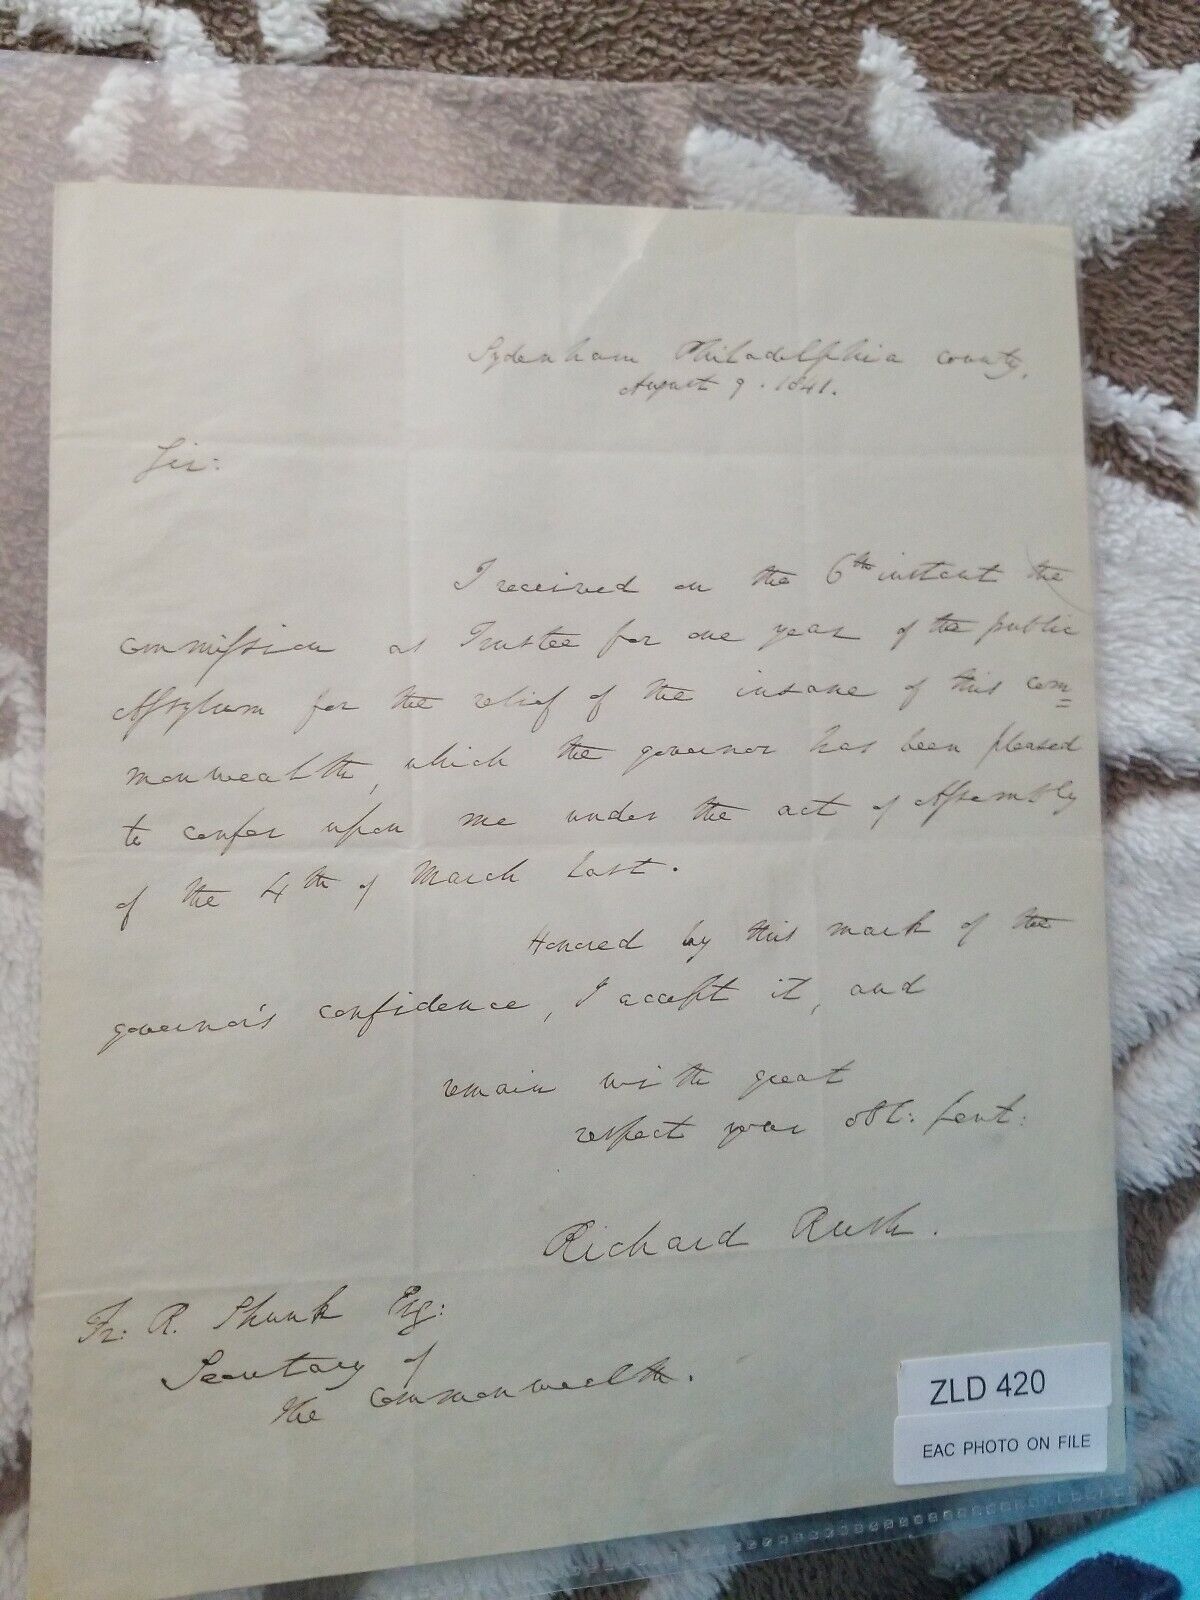 RICHARD RUSH  Att General under J. Madison ALS insane asylum trustee 8/9/1841